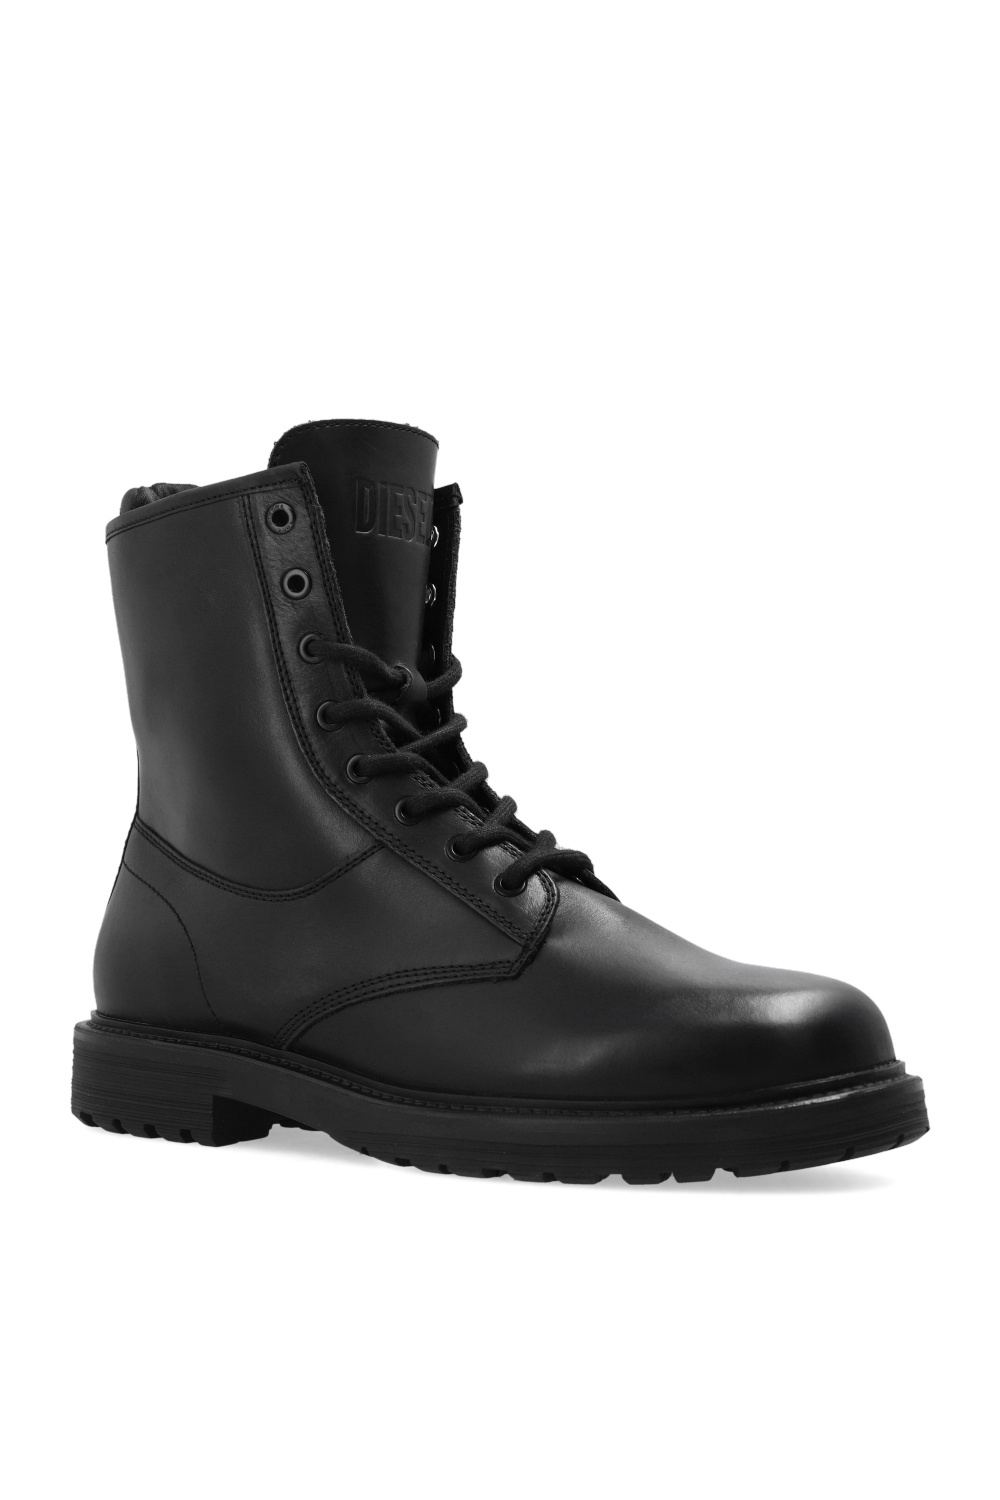 ‘D-Alabhama’ combat boots Diesel - Vitkac Italy